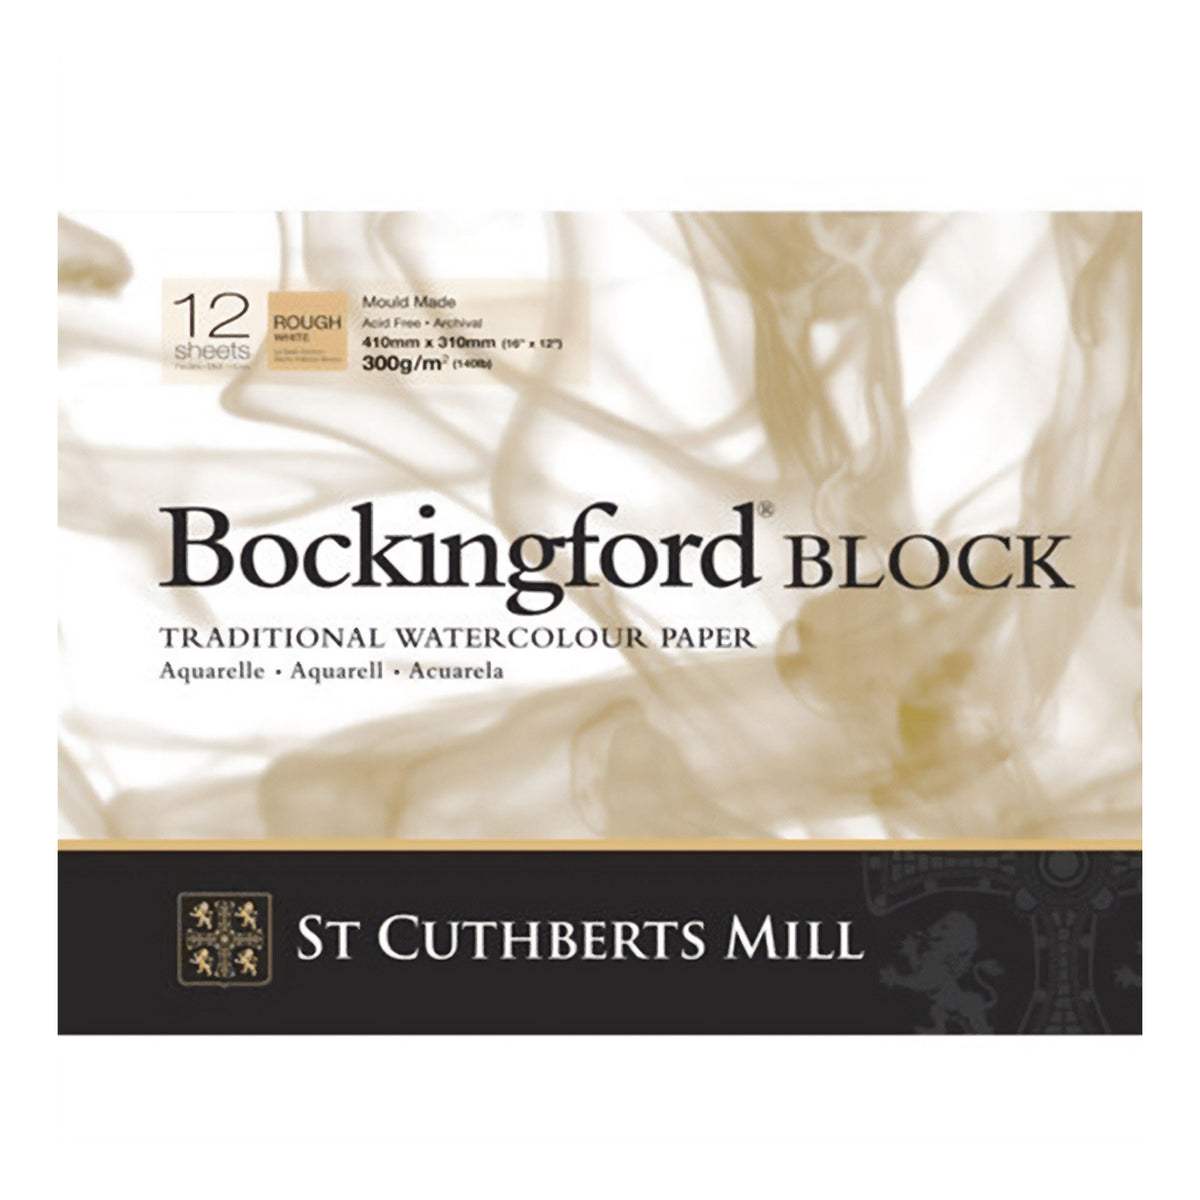 Bockingford Watercolour Blocks 12 Sheets 140lbs / 300gsm ROUGH